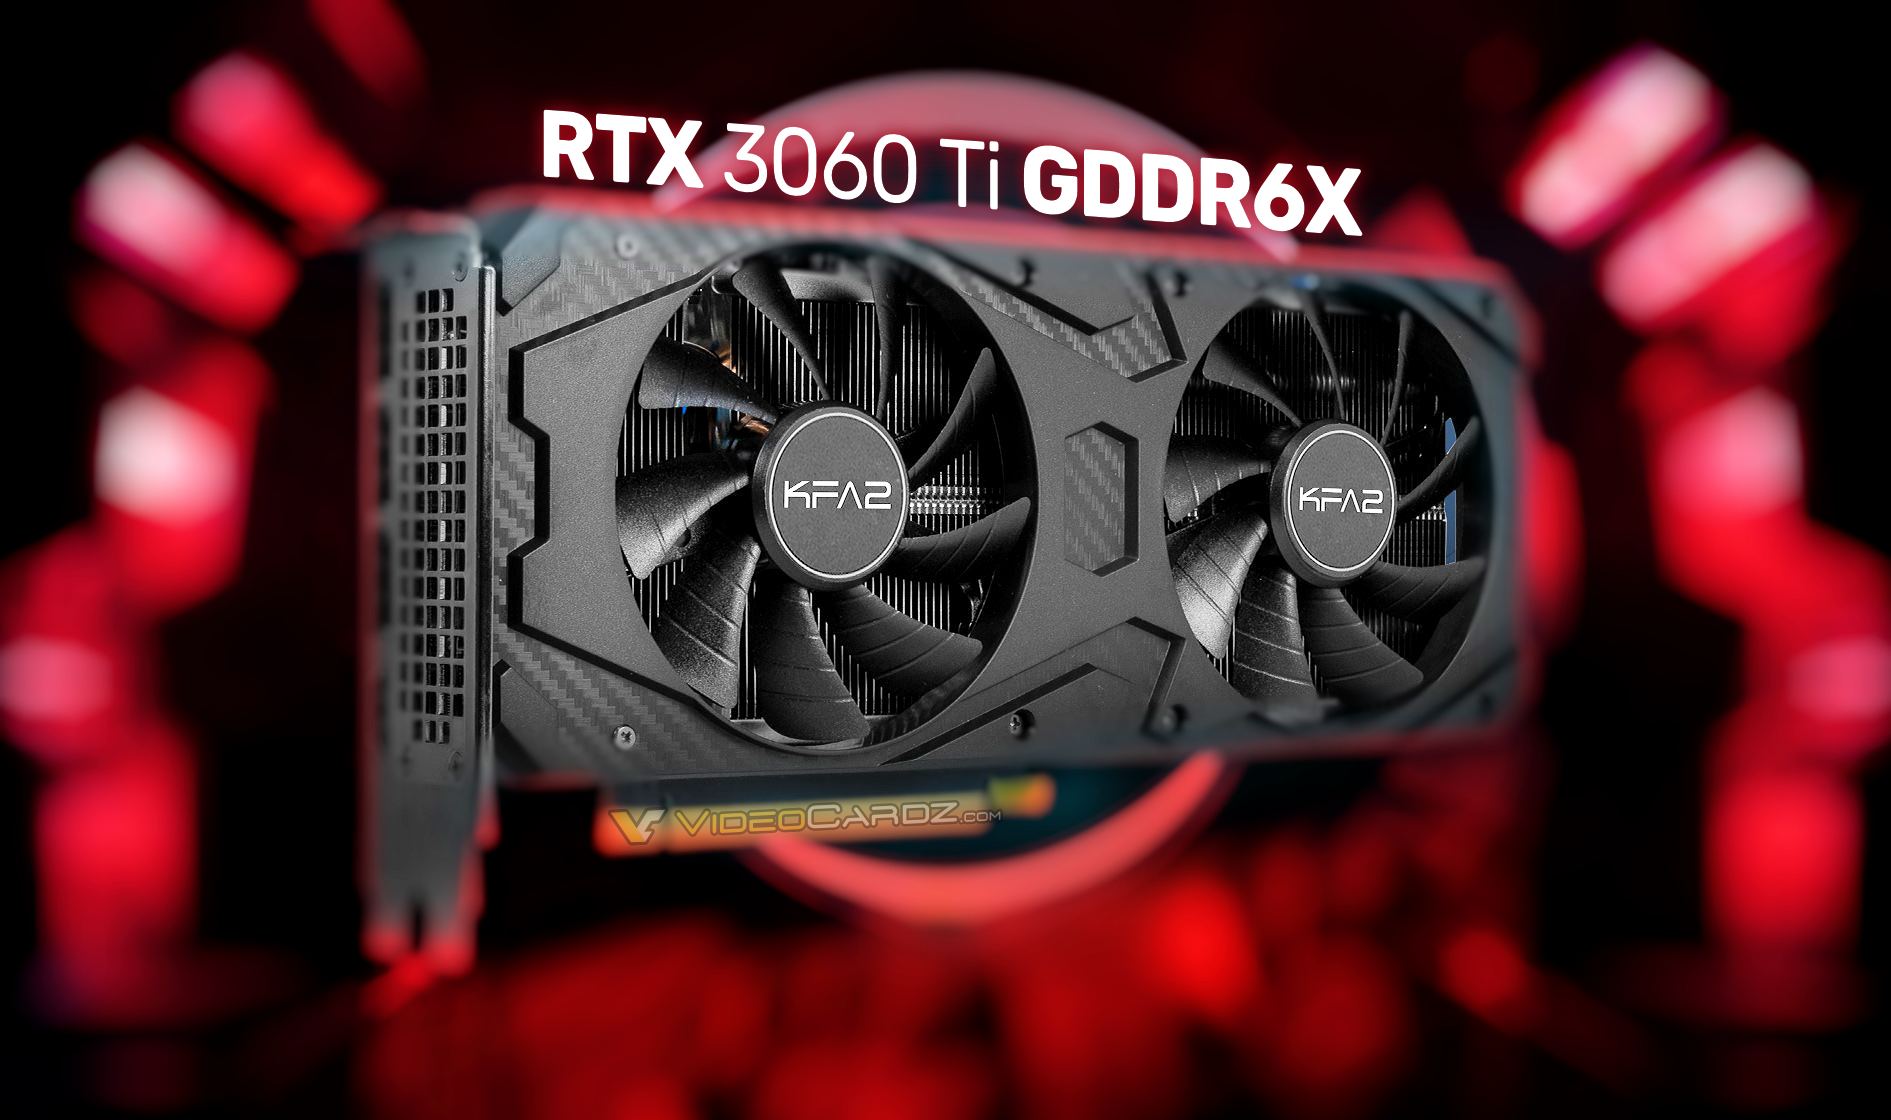 Best RTX 3060 & 3060 Ti prebuilt gaming PC in 2024